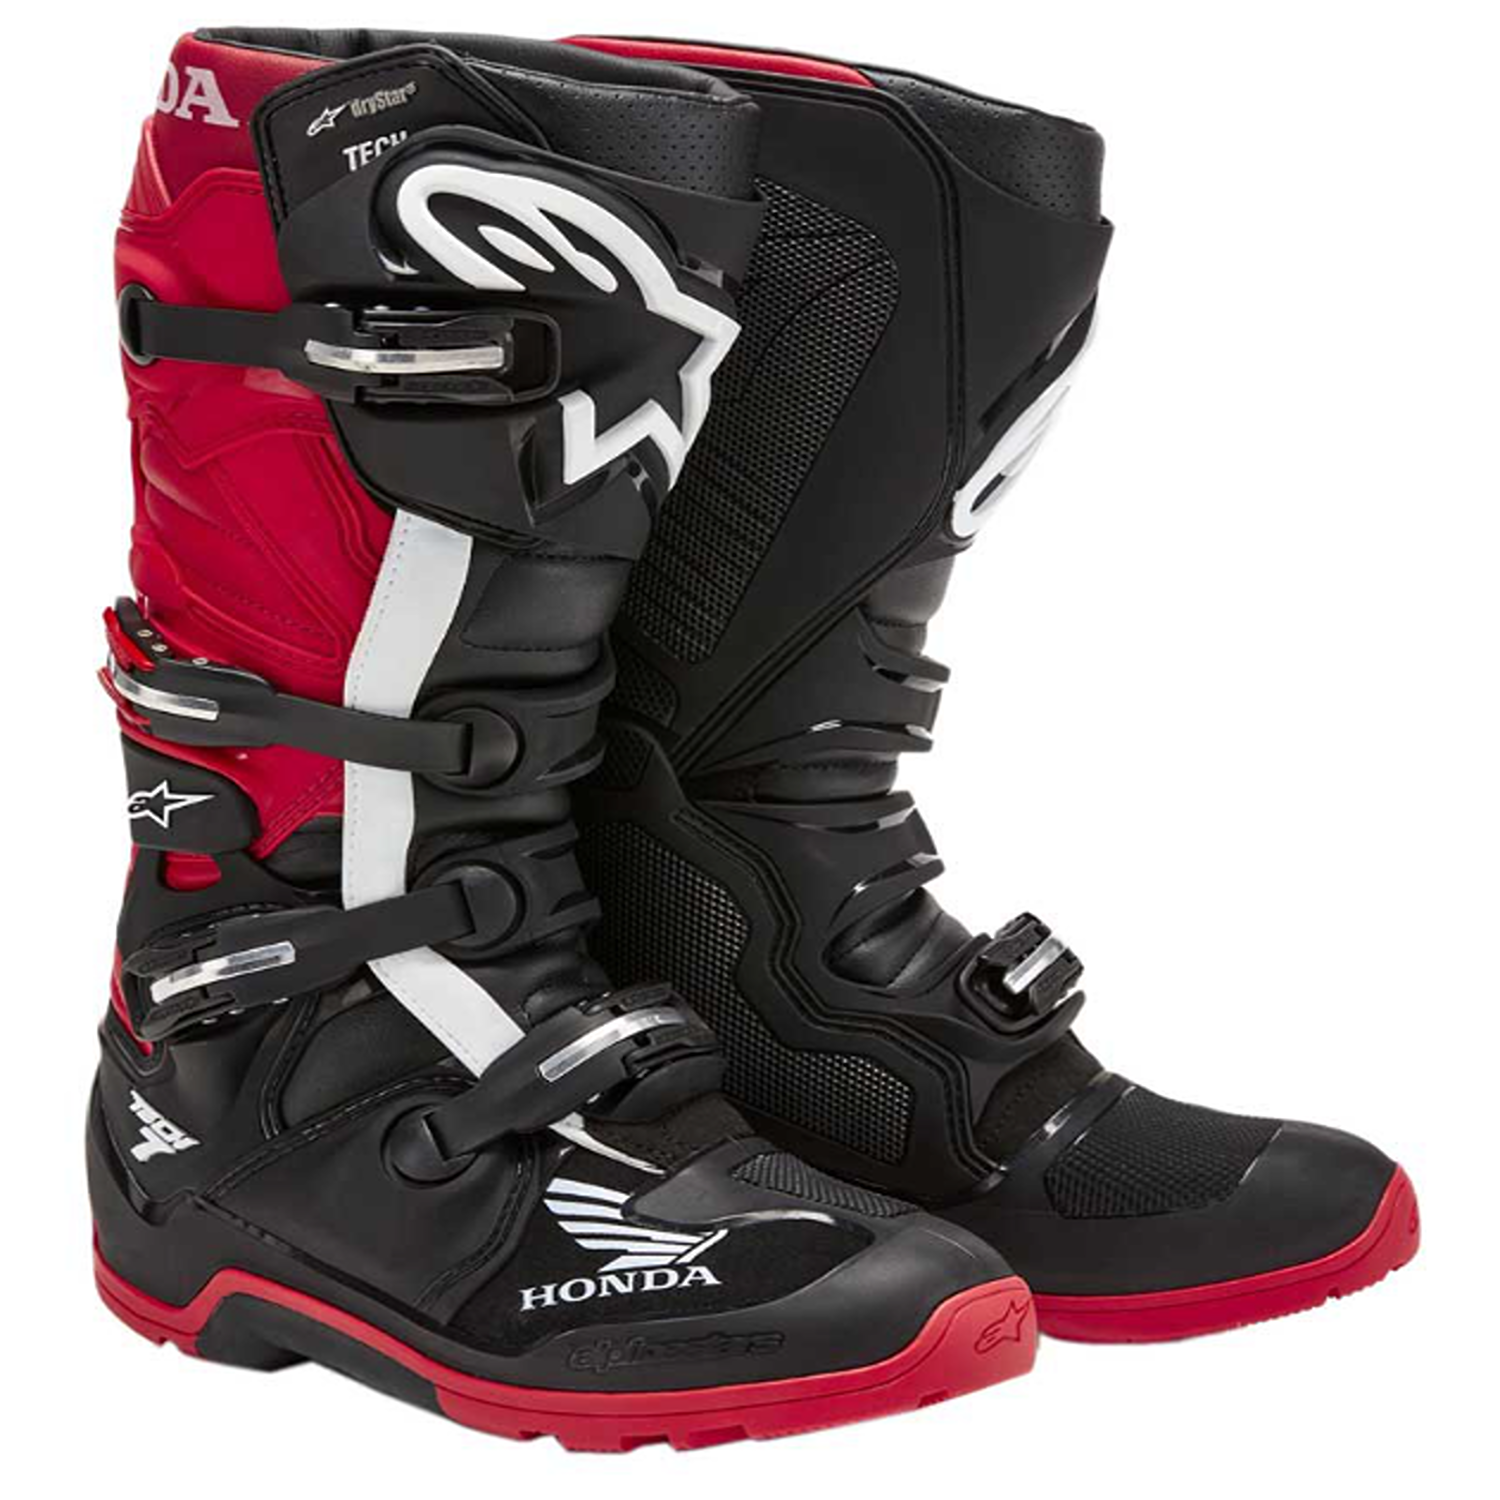 Image of Alpinestars Honda Tech 7 Enduro Drystar Boots Black Bright Red Taille US 7